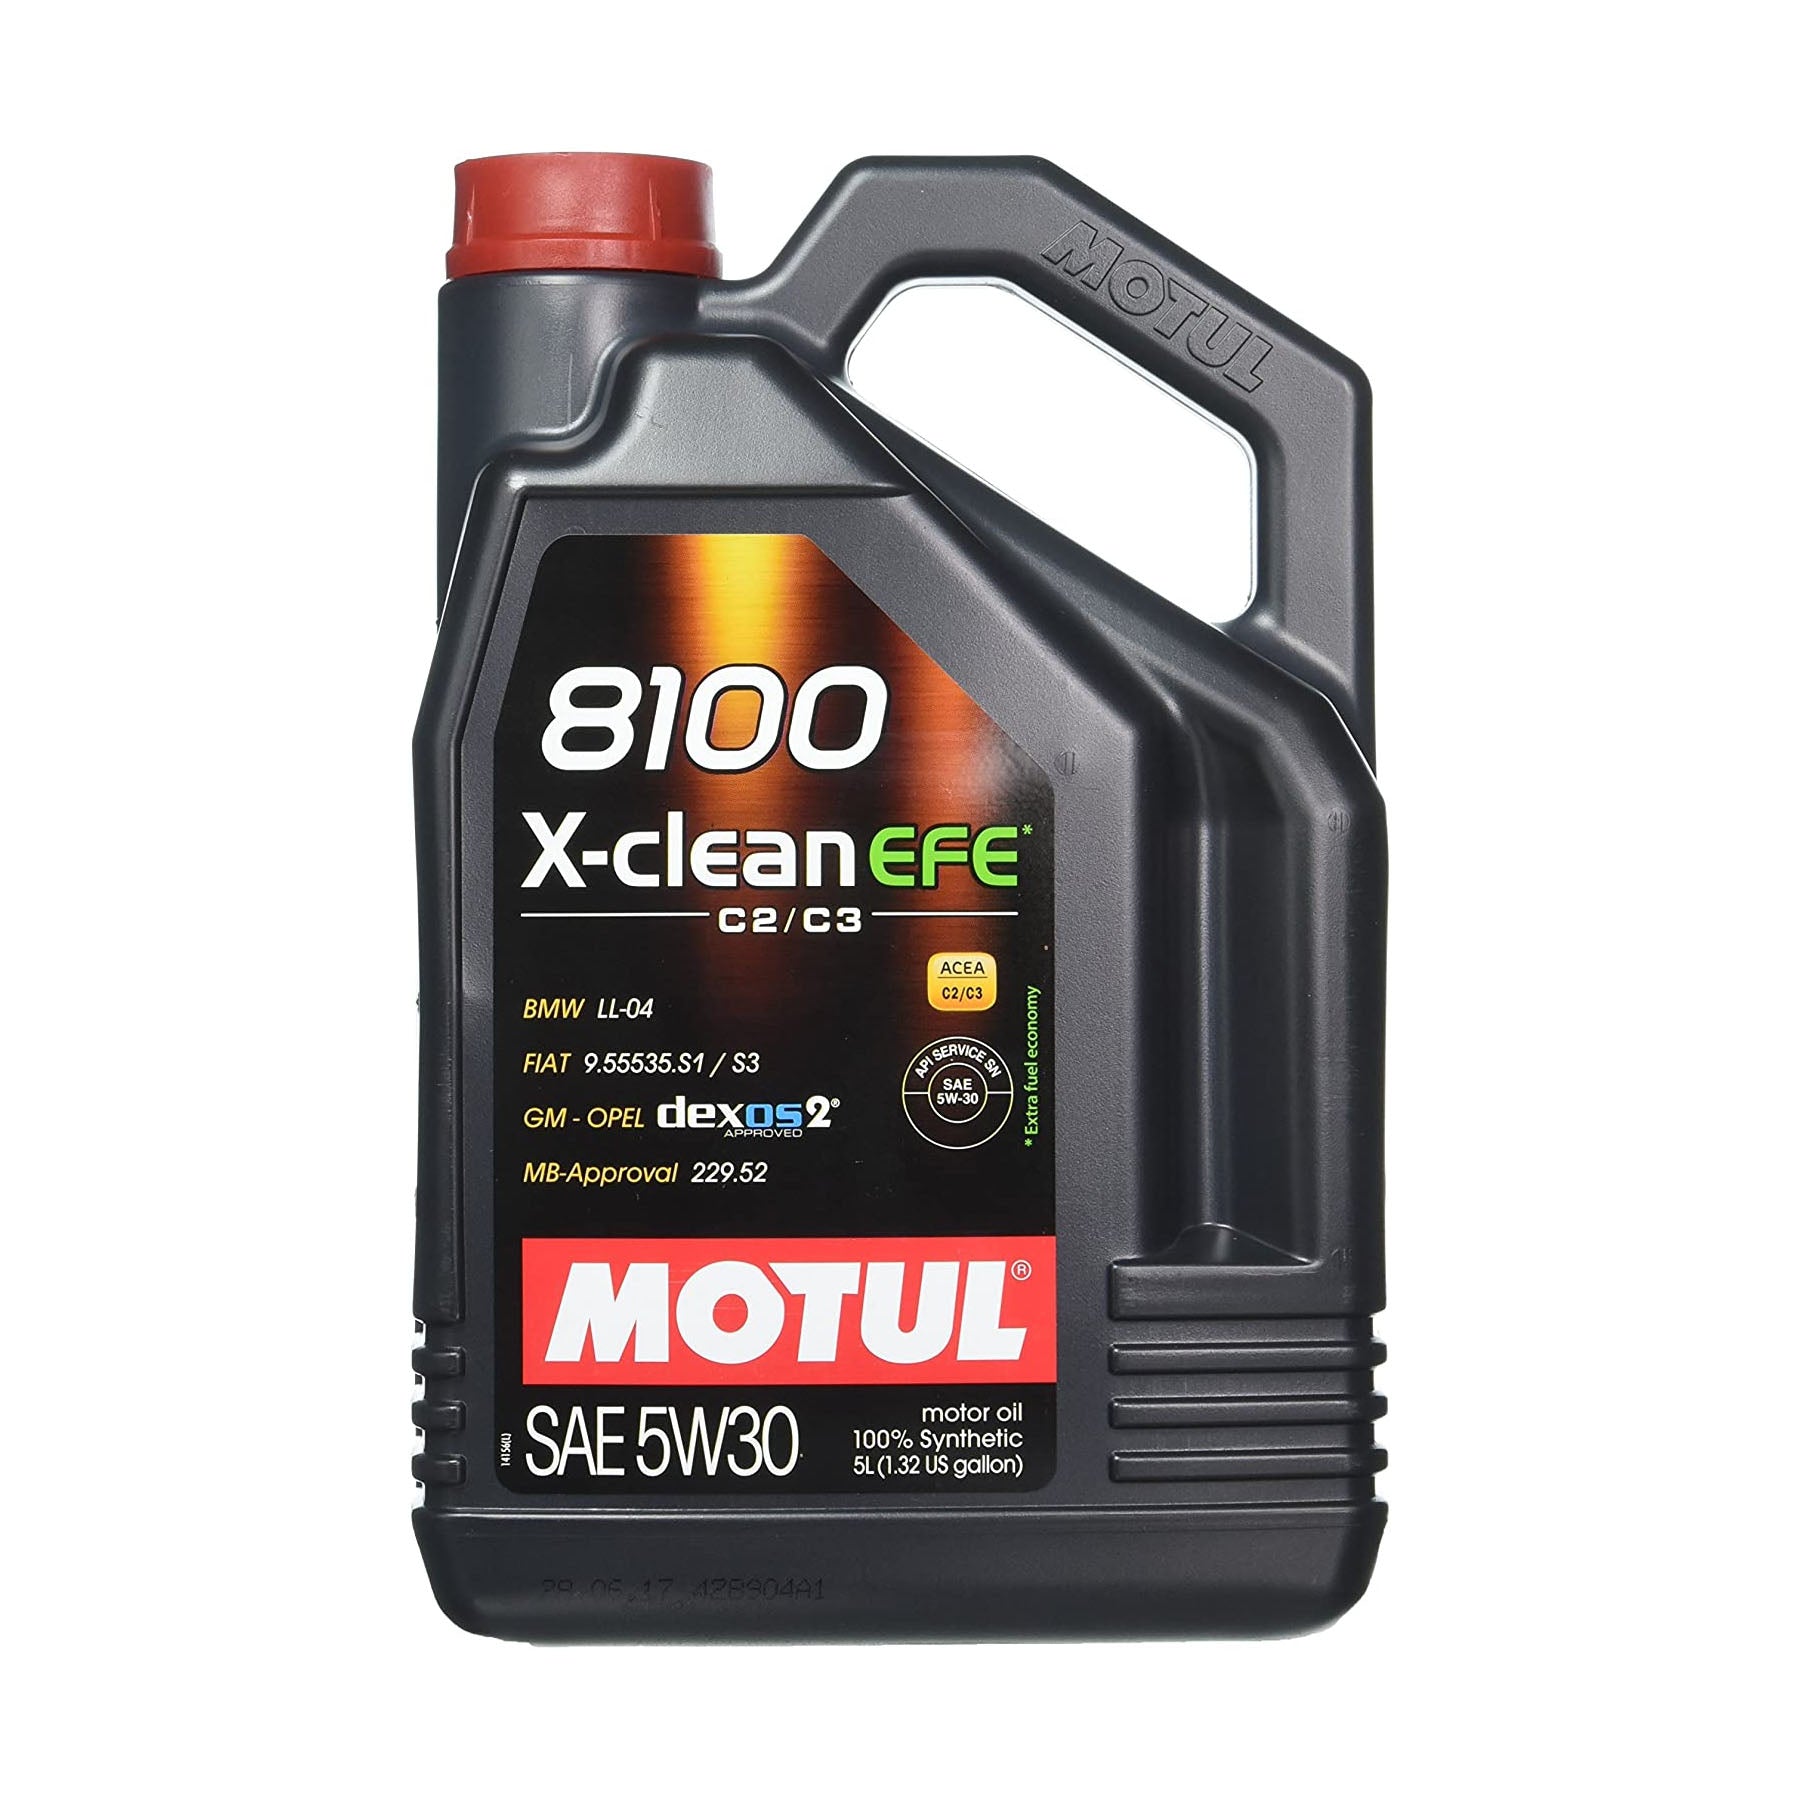 Motul 8100 X-clean EFE 5W30 Motor Oil 5-Liter Jug